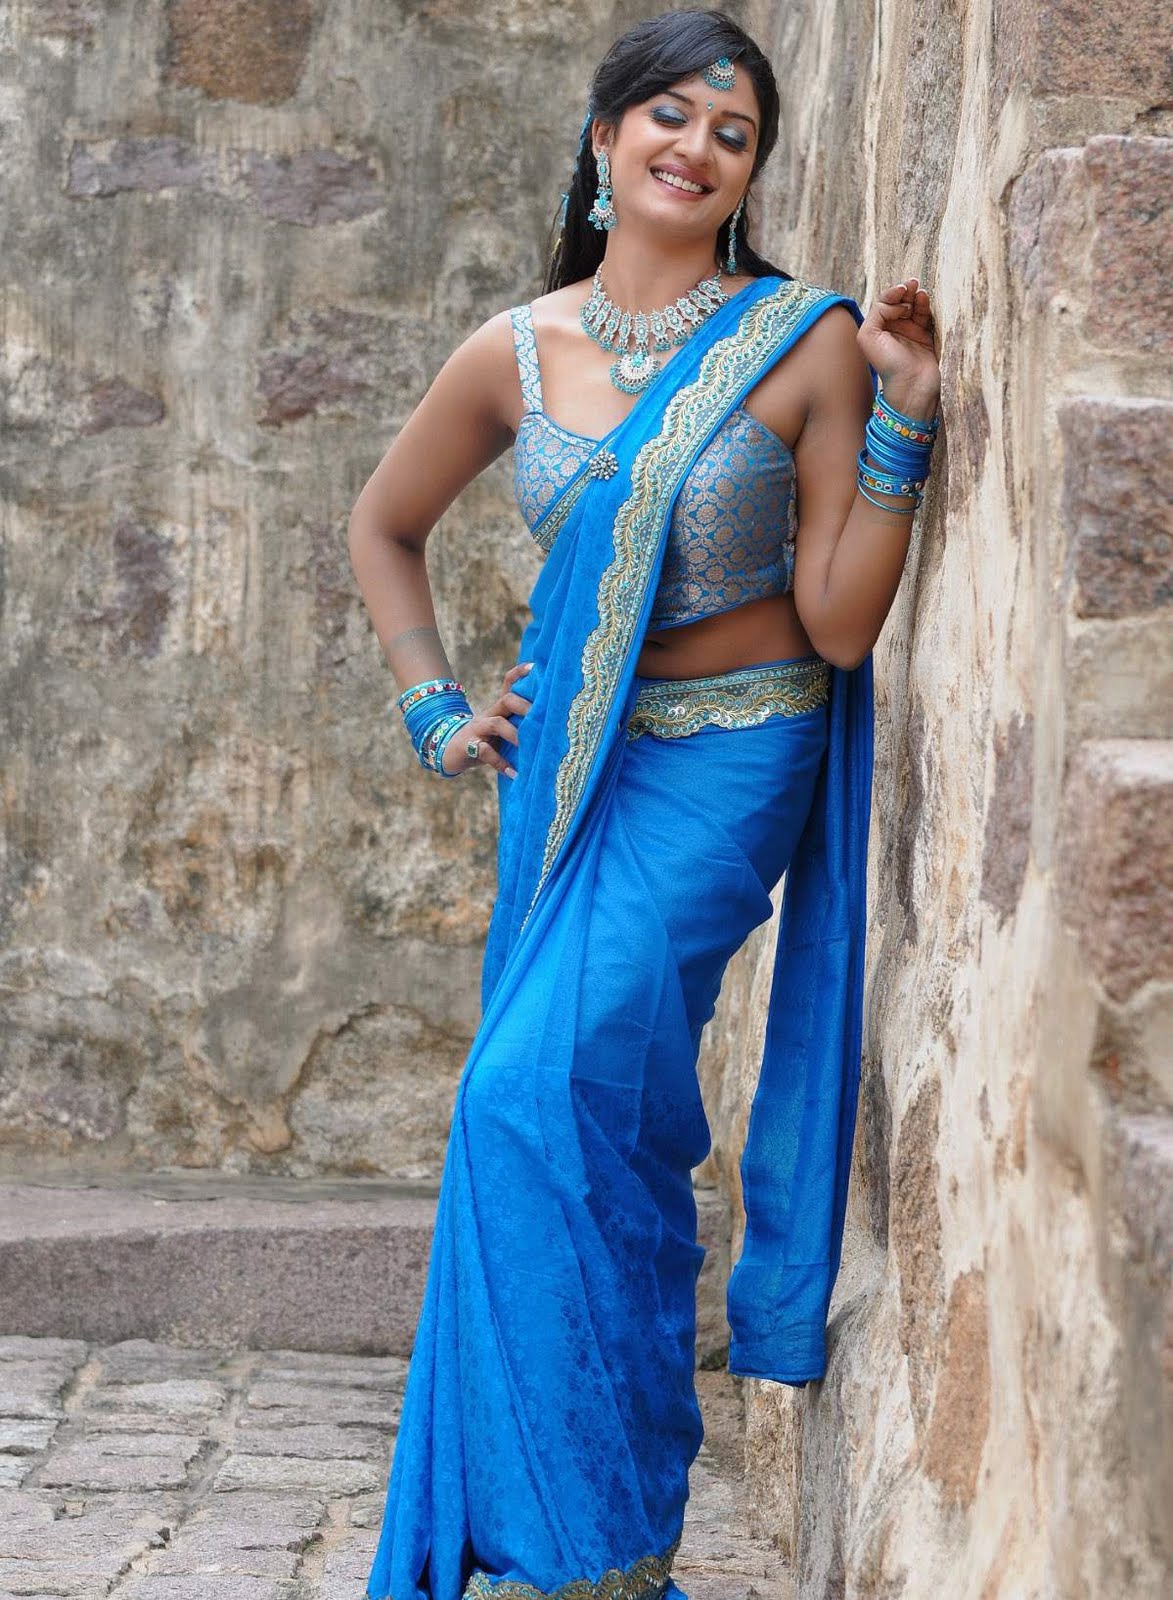 cinesizzlers: Actress vimala-raman stills from the movie 